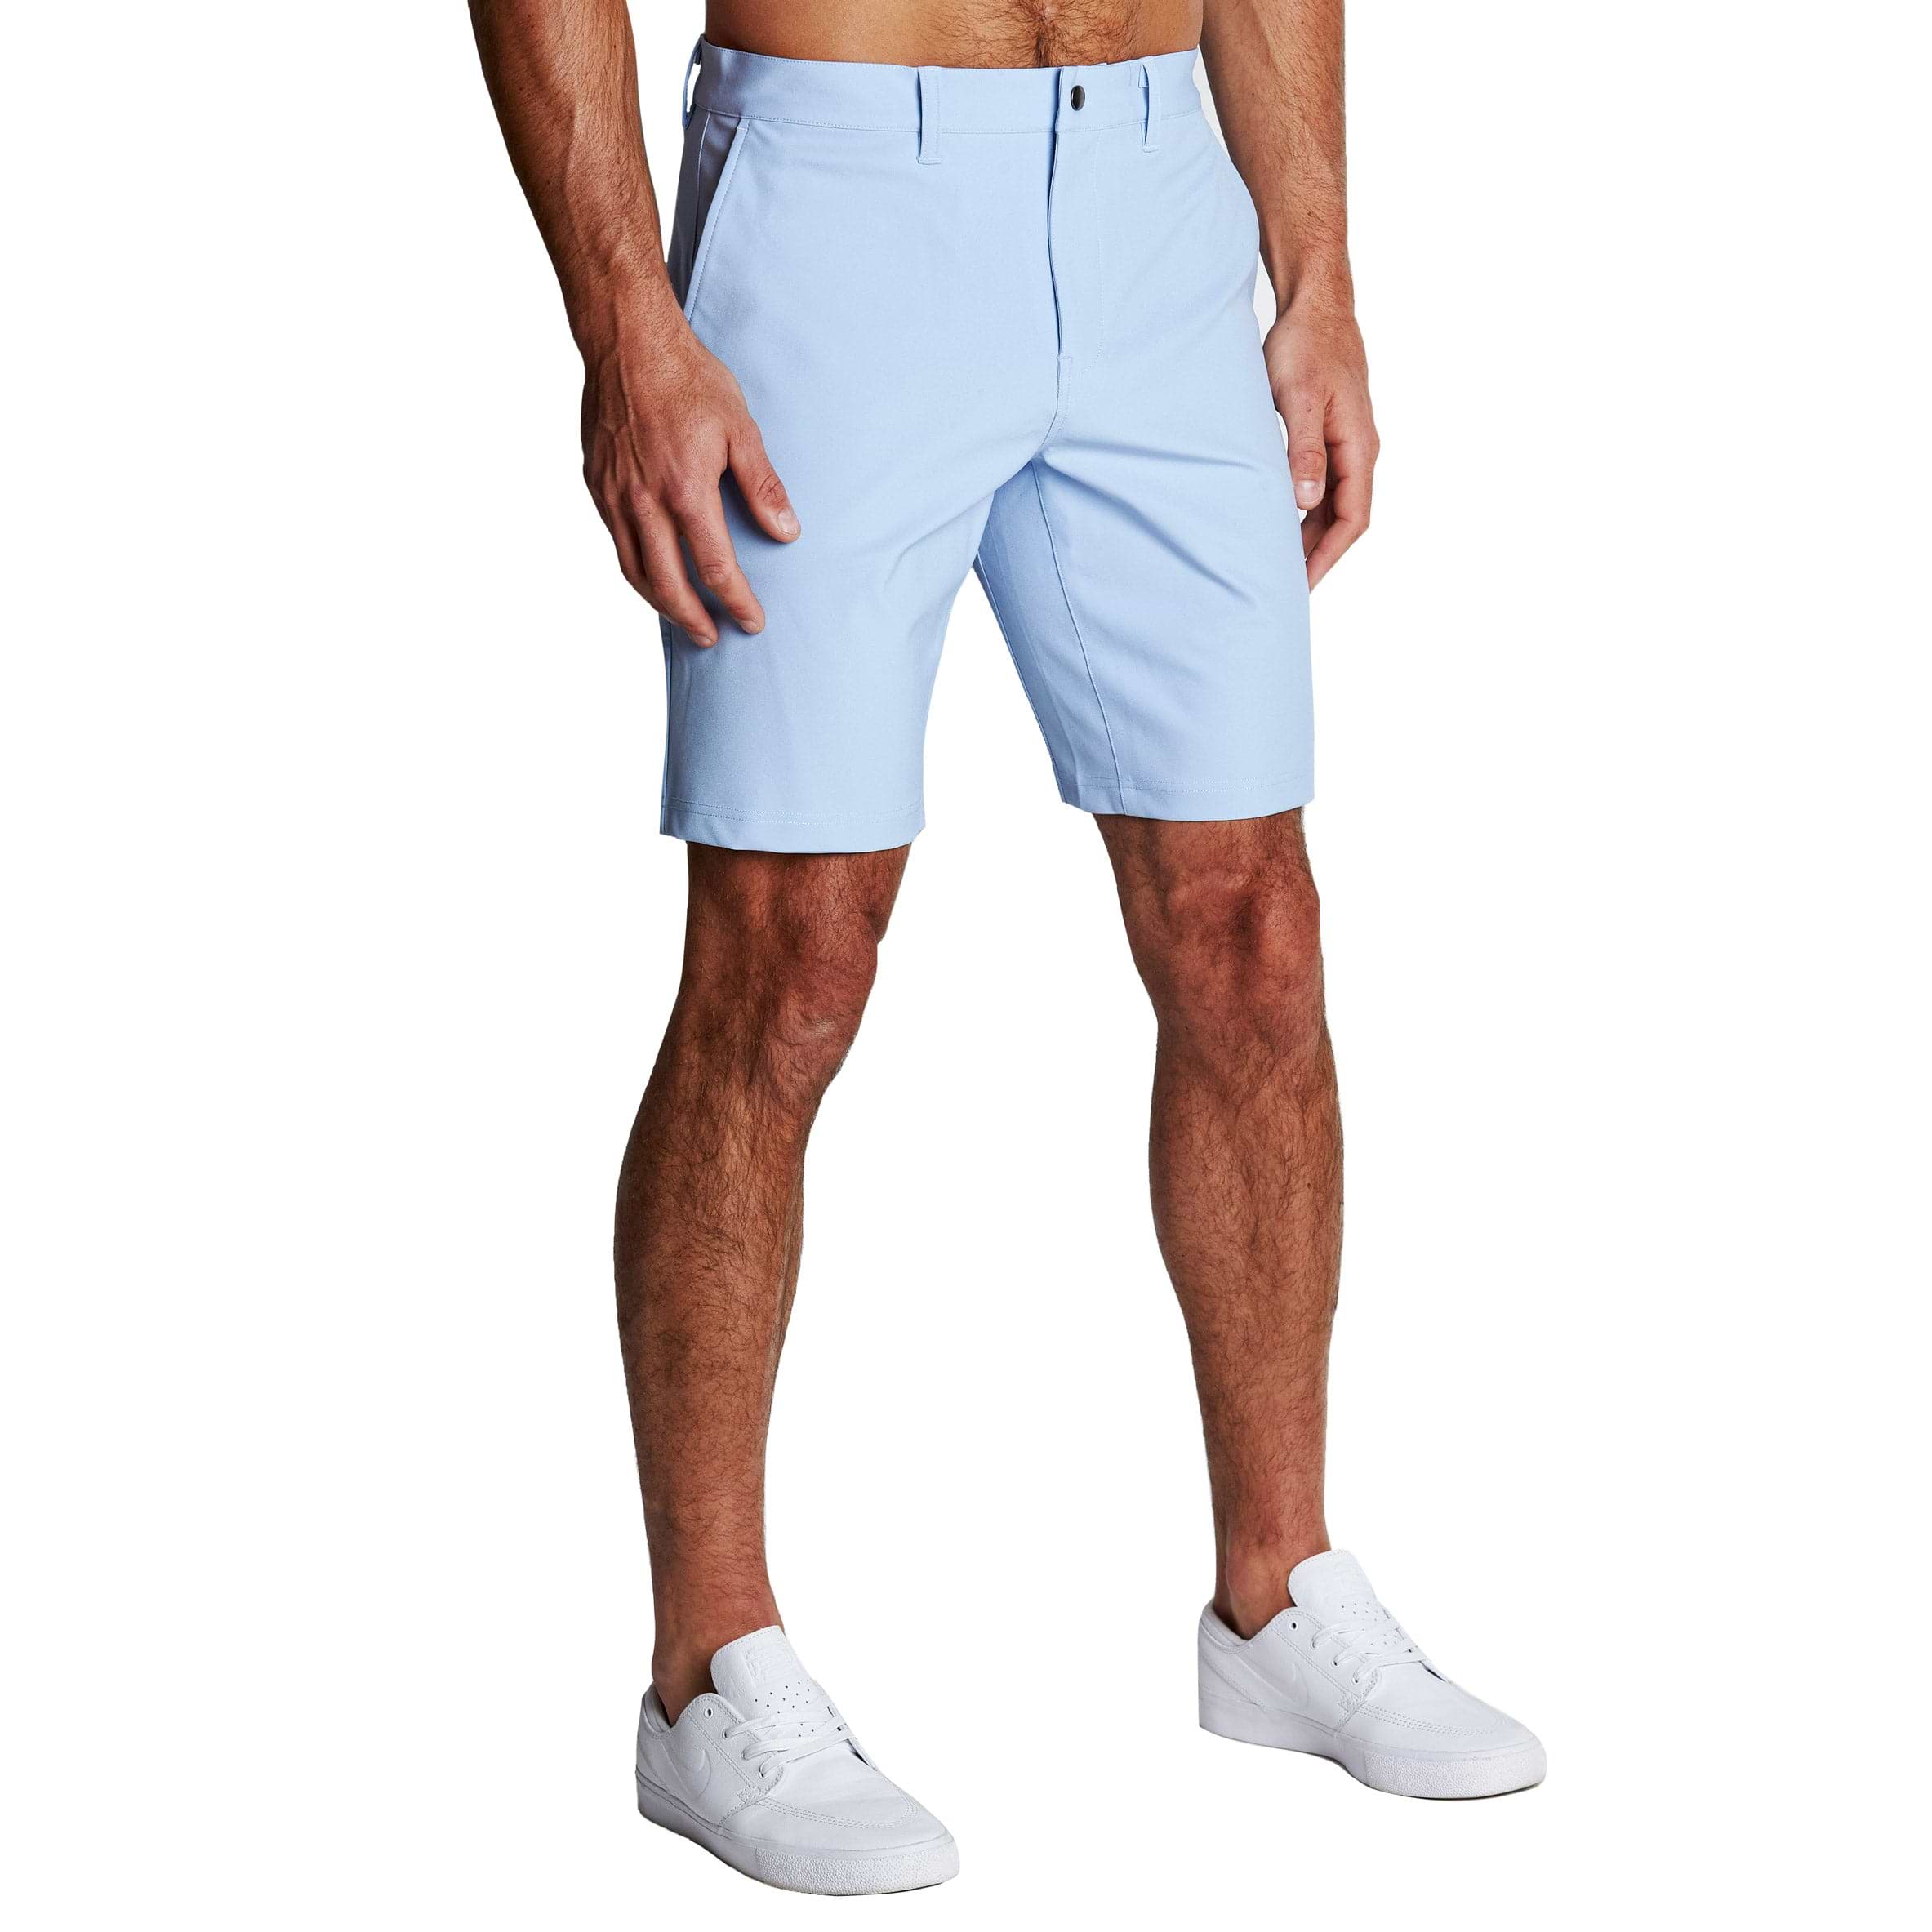 Athletic Fit Shorts - Light Blue